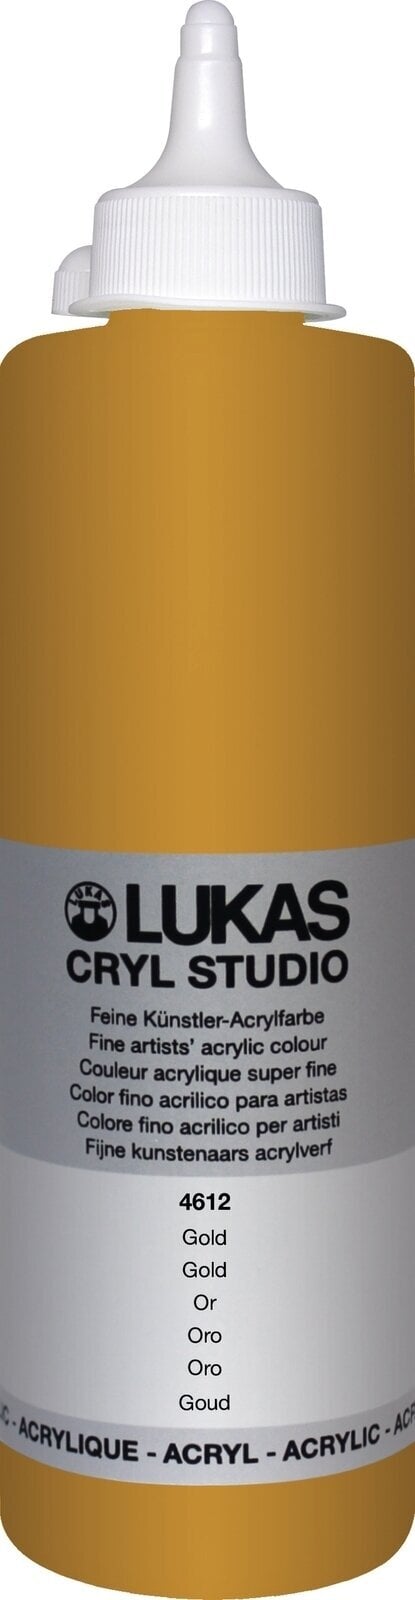 Akrilfesték Lukas Cryl Studio Acrylic Paint Plastic Bottle Akril festék Gold 500 ml 1 db